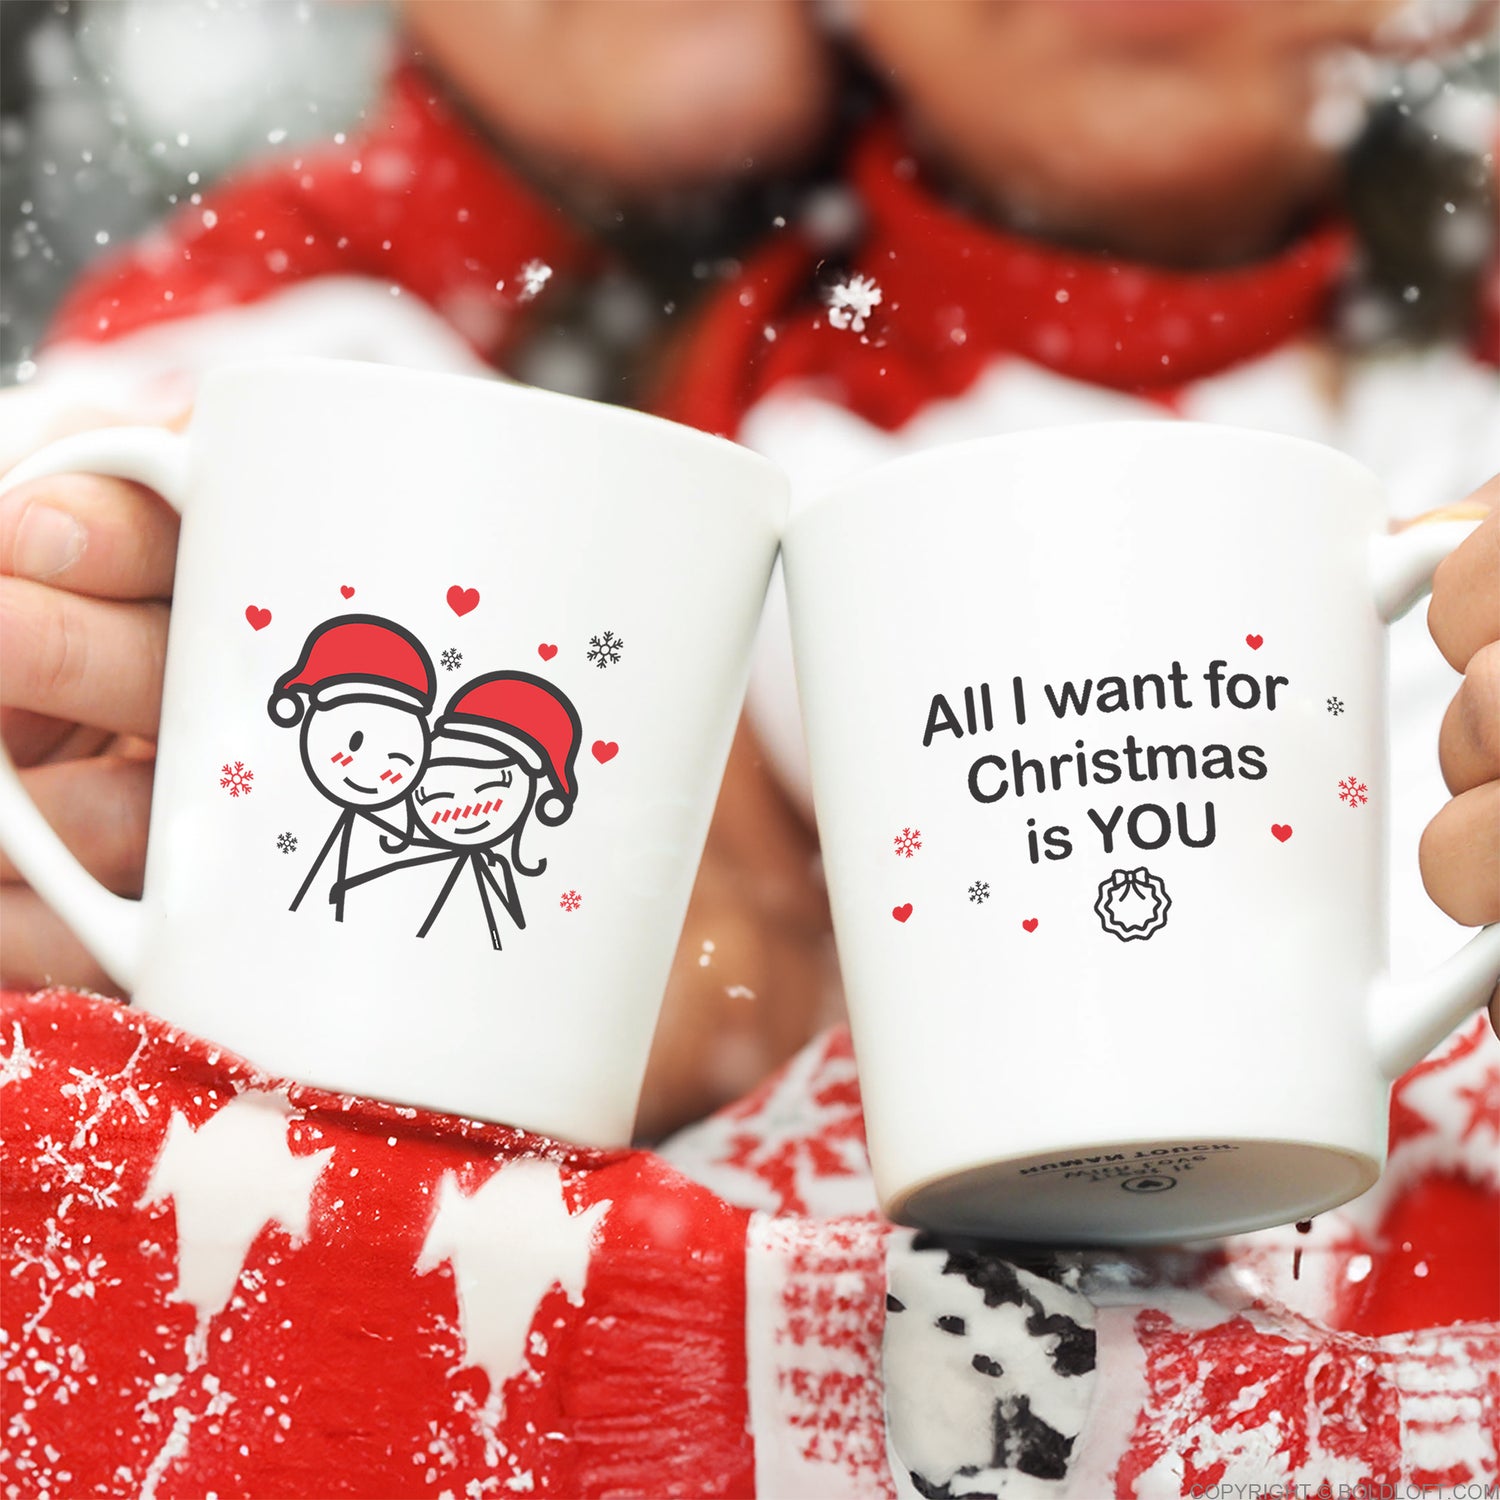 BoldLoft Merry Christmas Couple Mugs. His and hers Christmas mugs with a heartfelt message and 2 stick figures